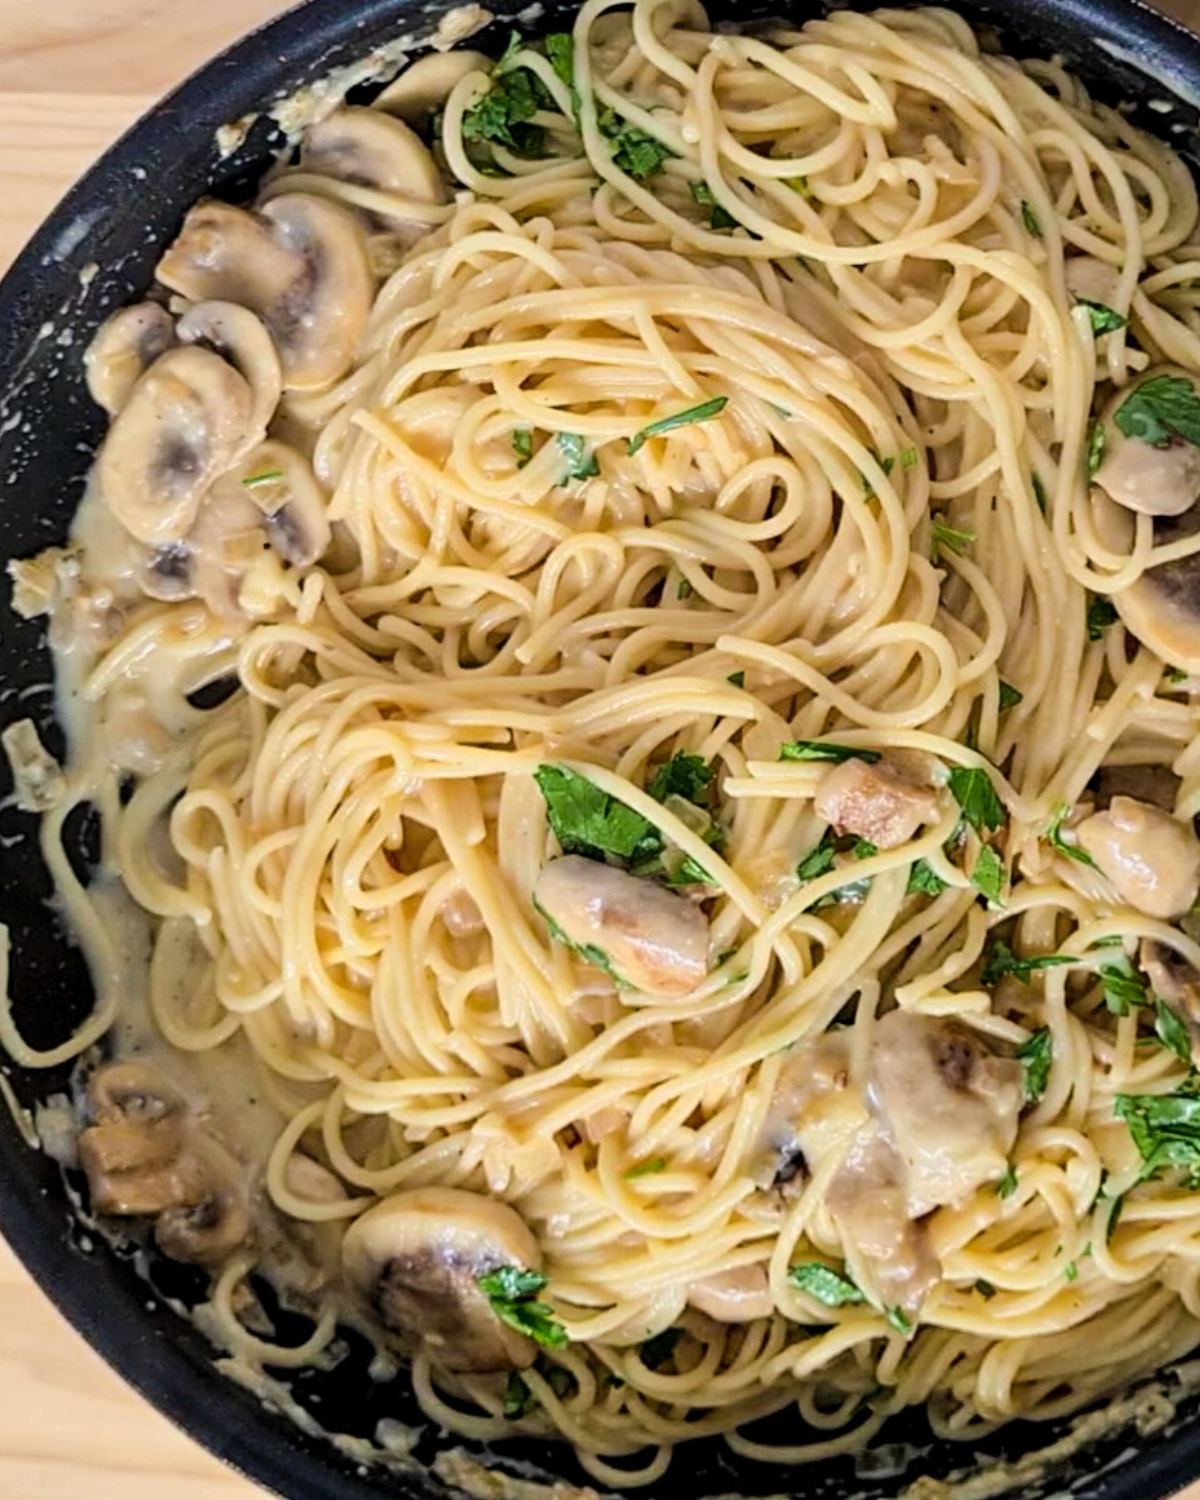 Large pot/skillet of creamy mushroom pasta